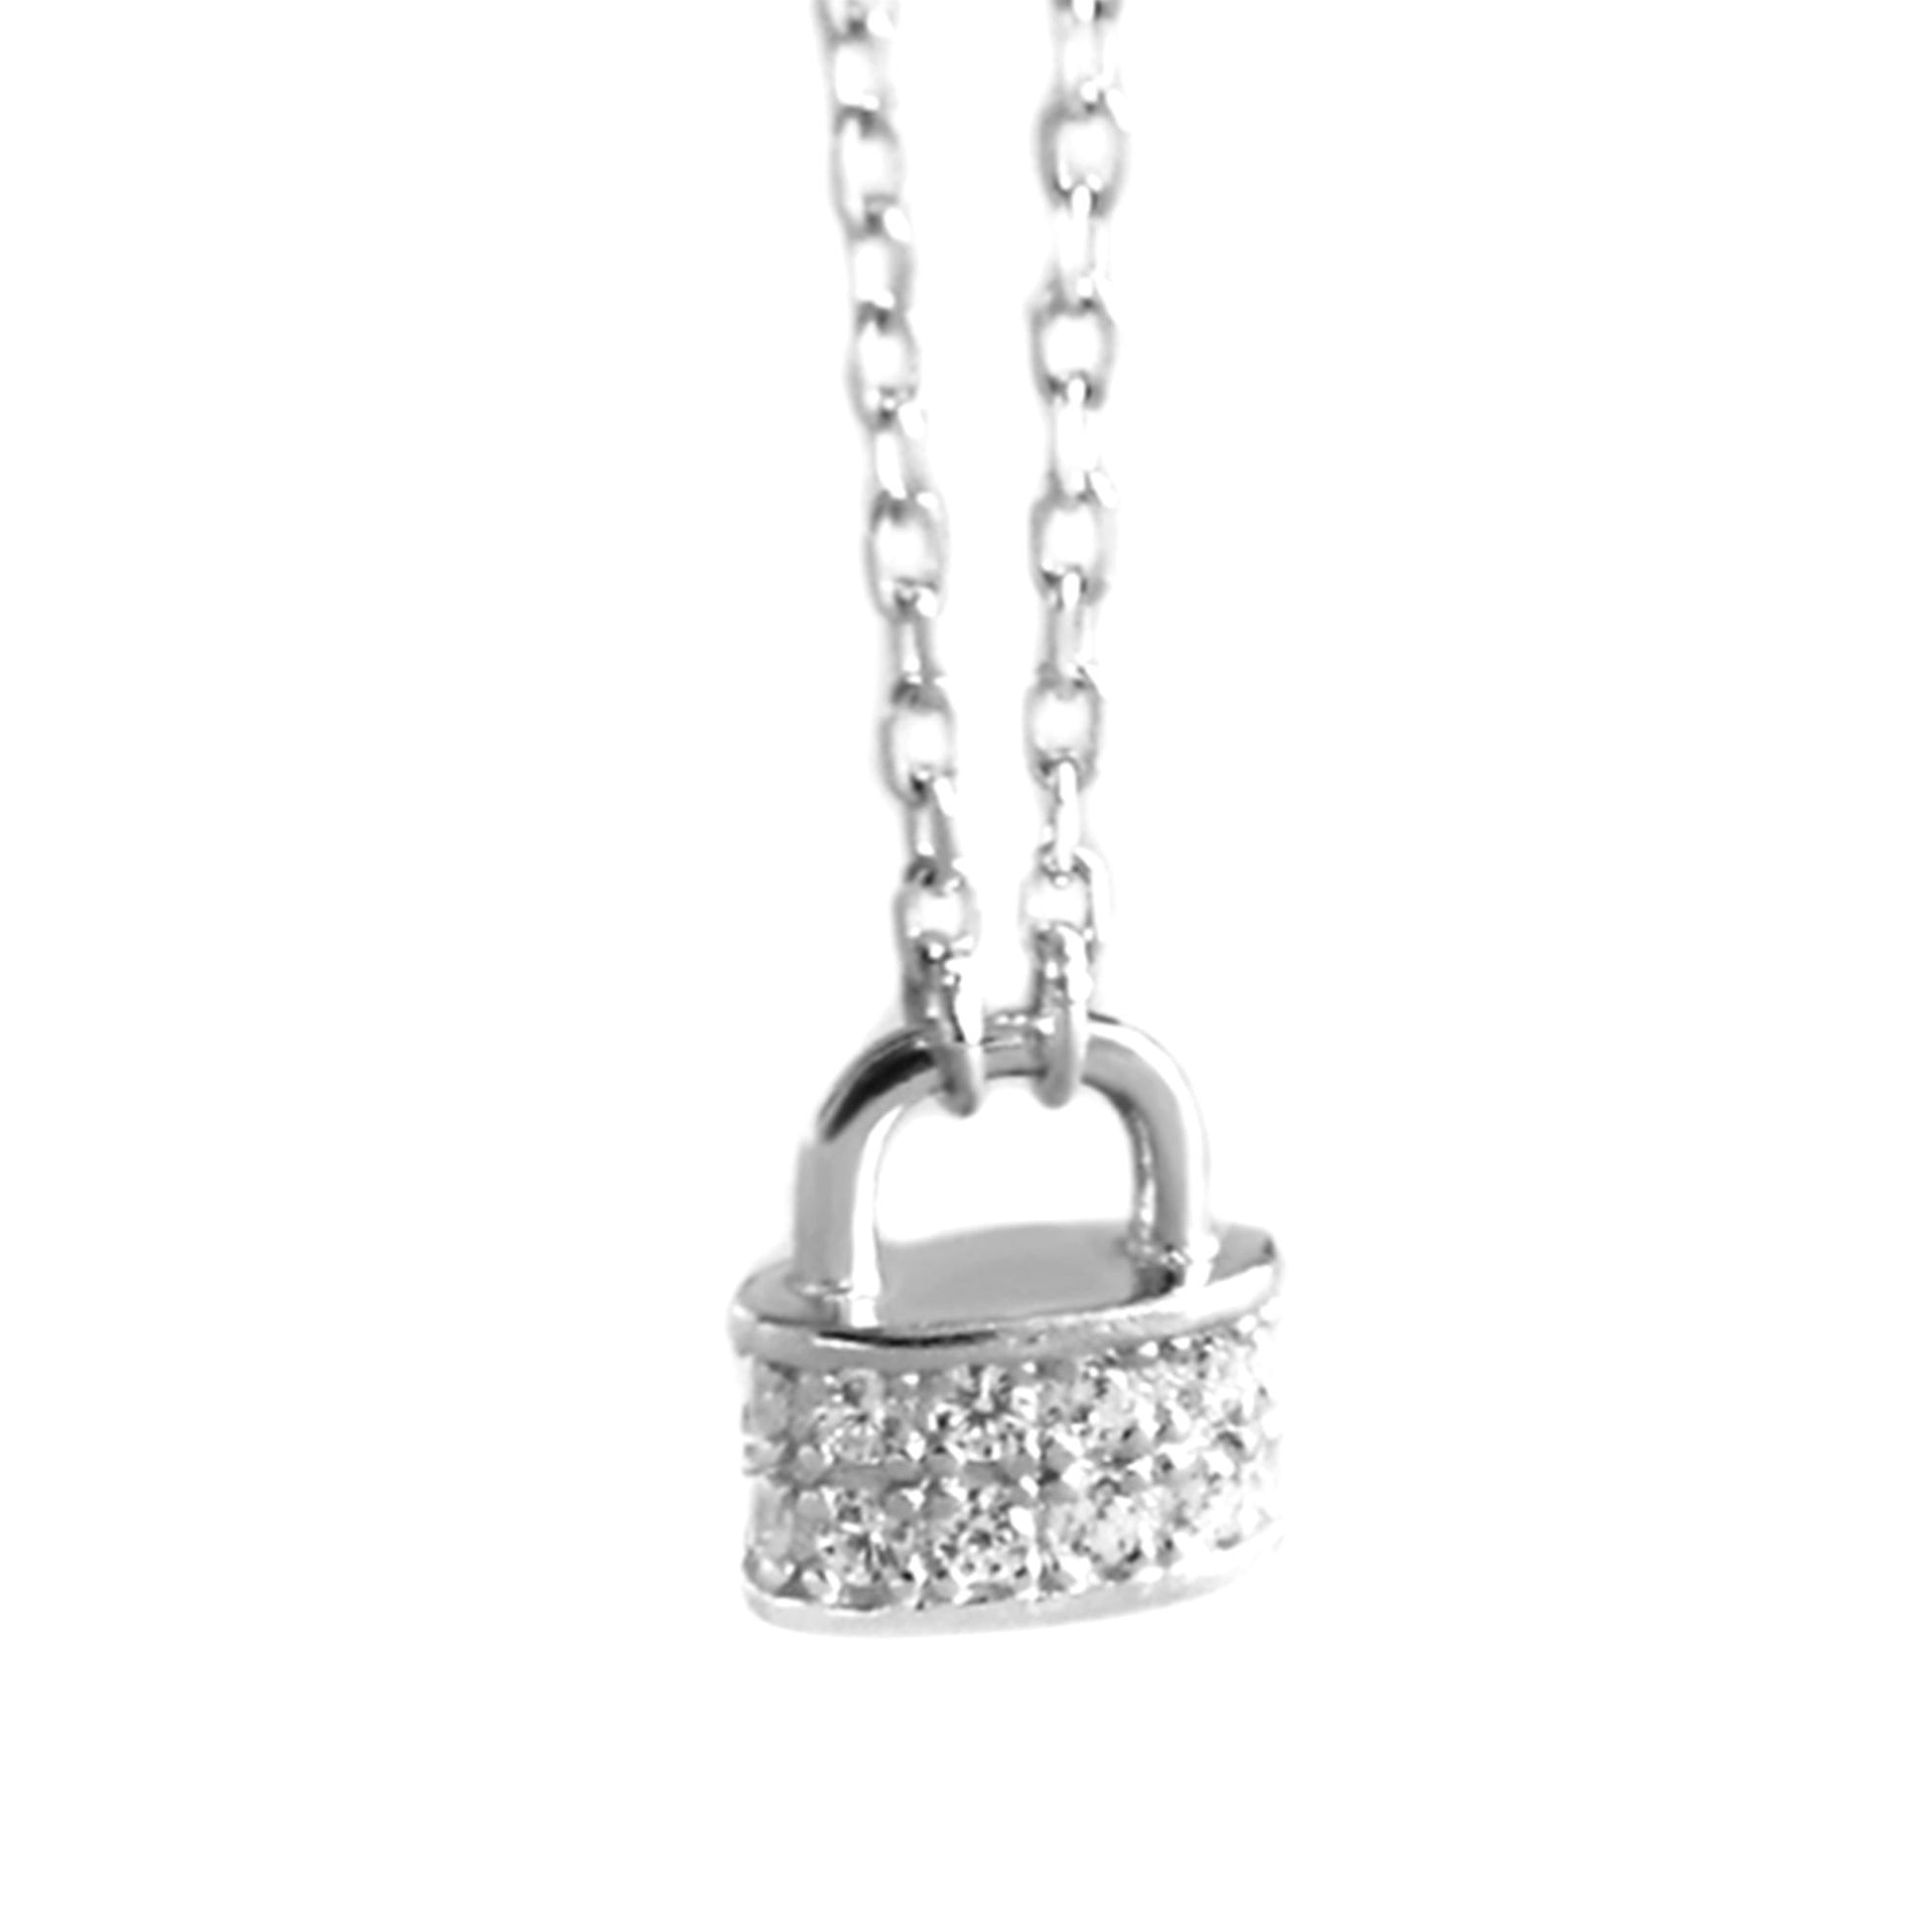 Sterling Silver Cz Paved Padlock Petite Lock Charm Pendant Necklace - sugarkittenlondon